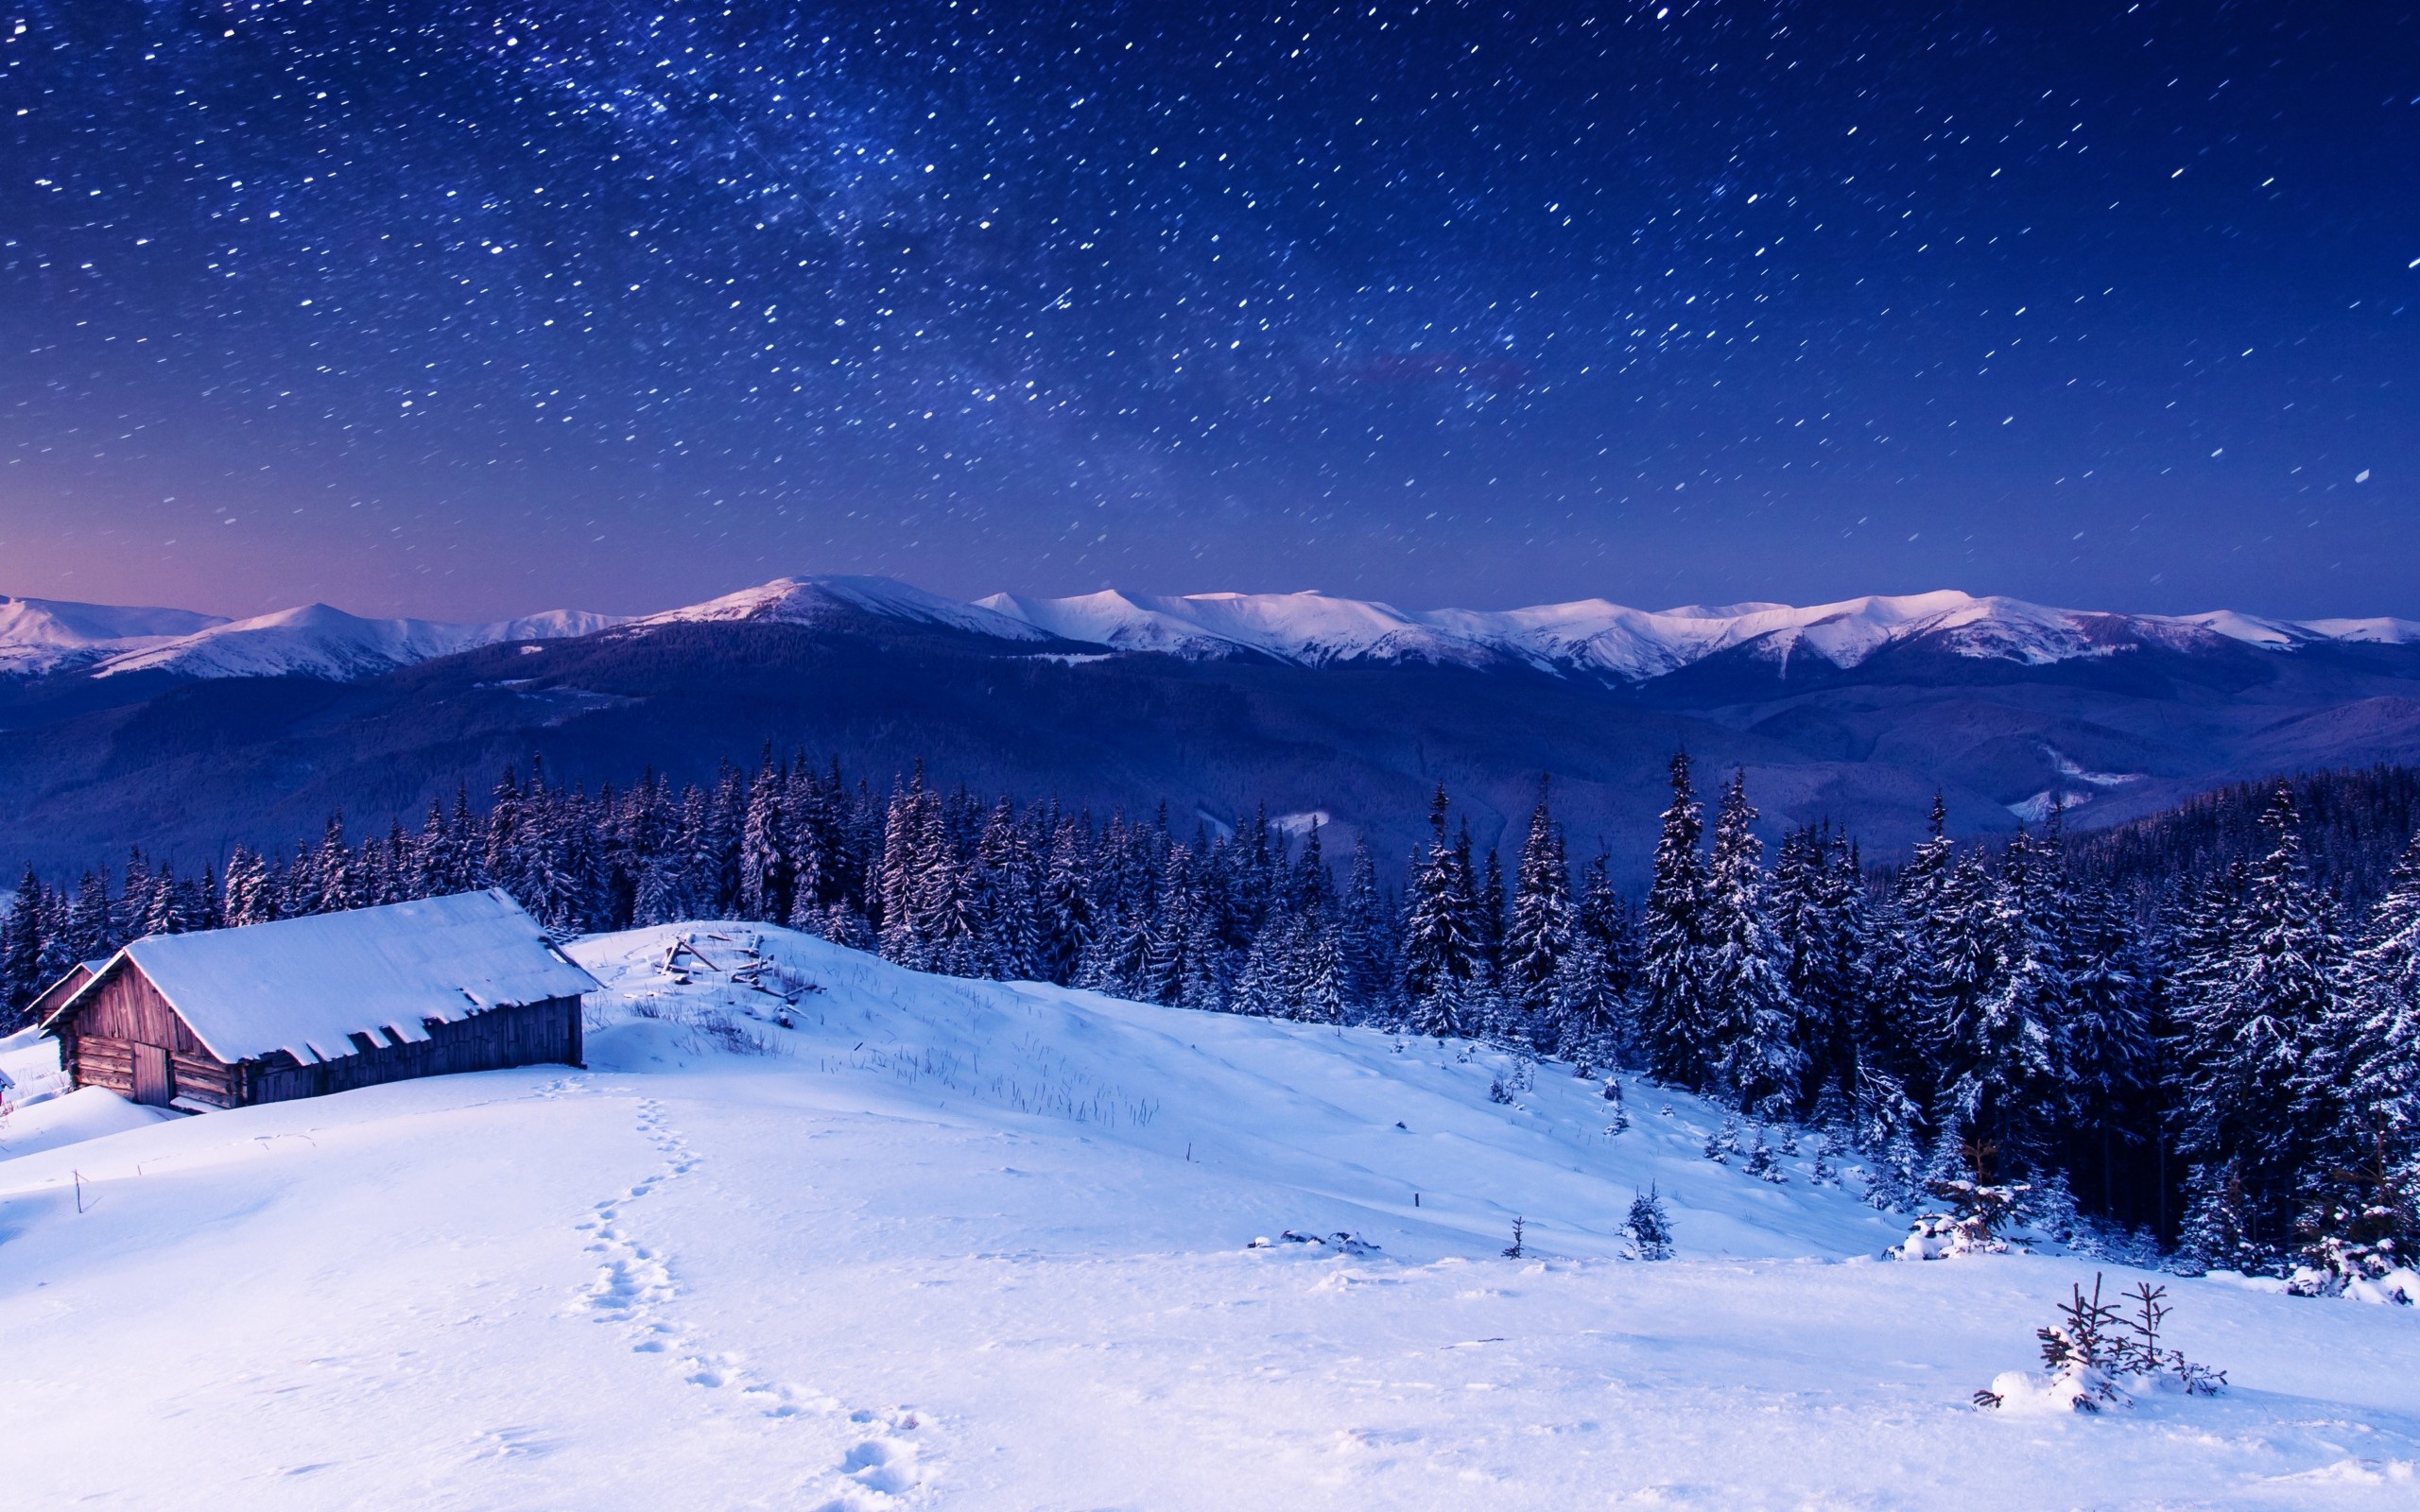 Winter: Starry Winter Evening Nature Stars Snow Night Sky Image ...